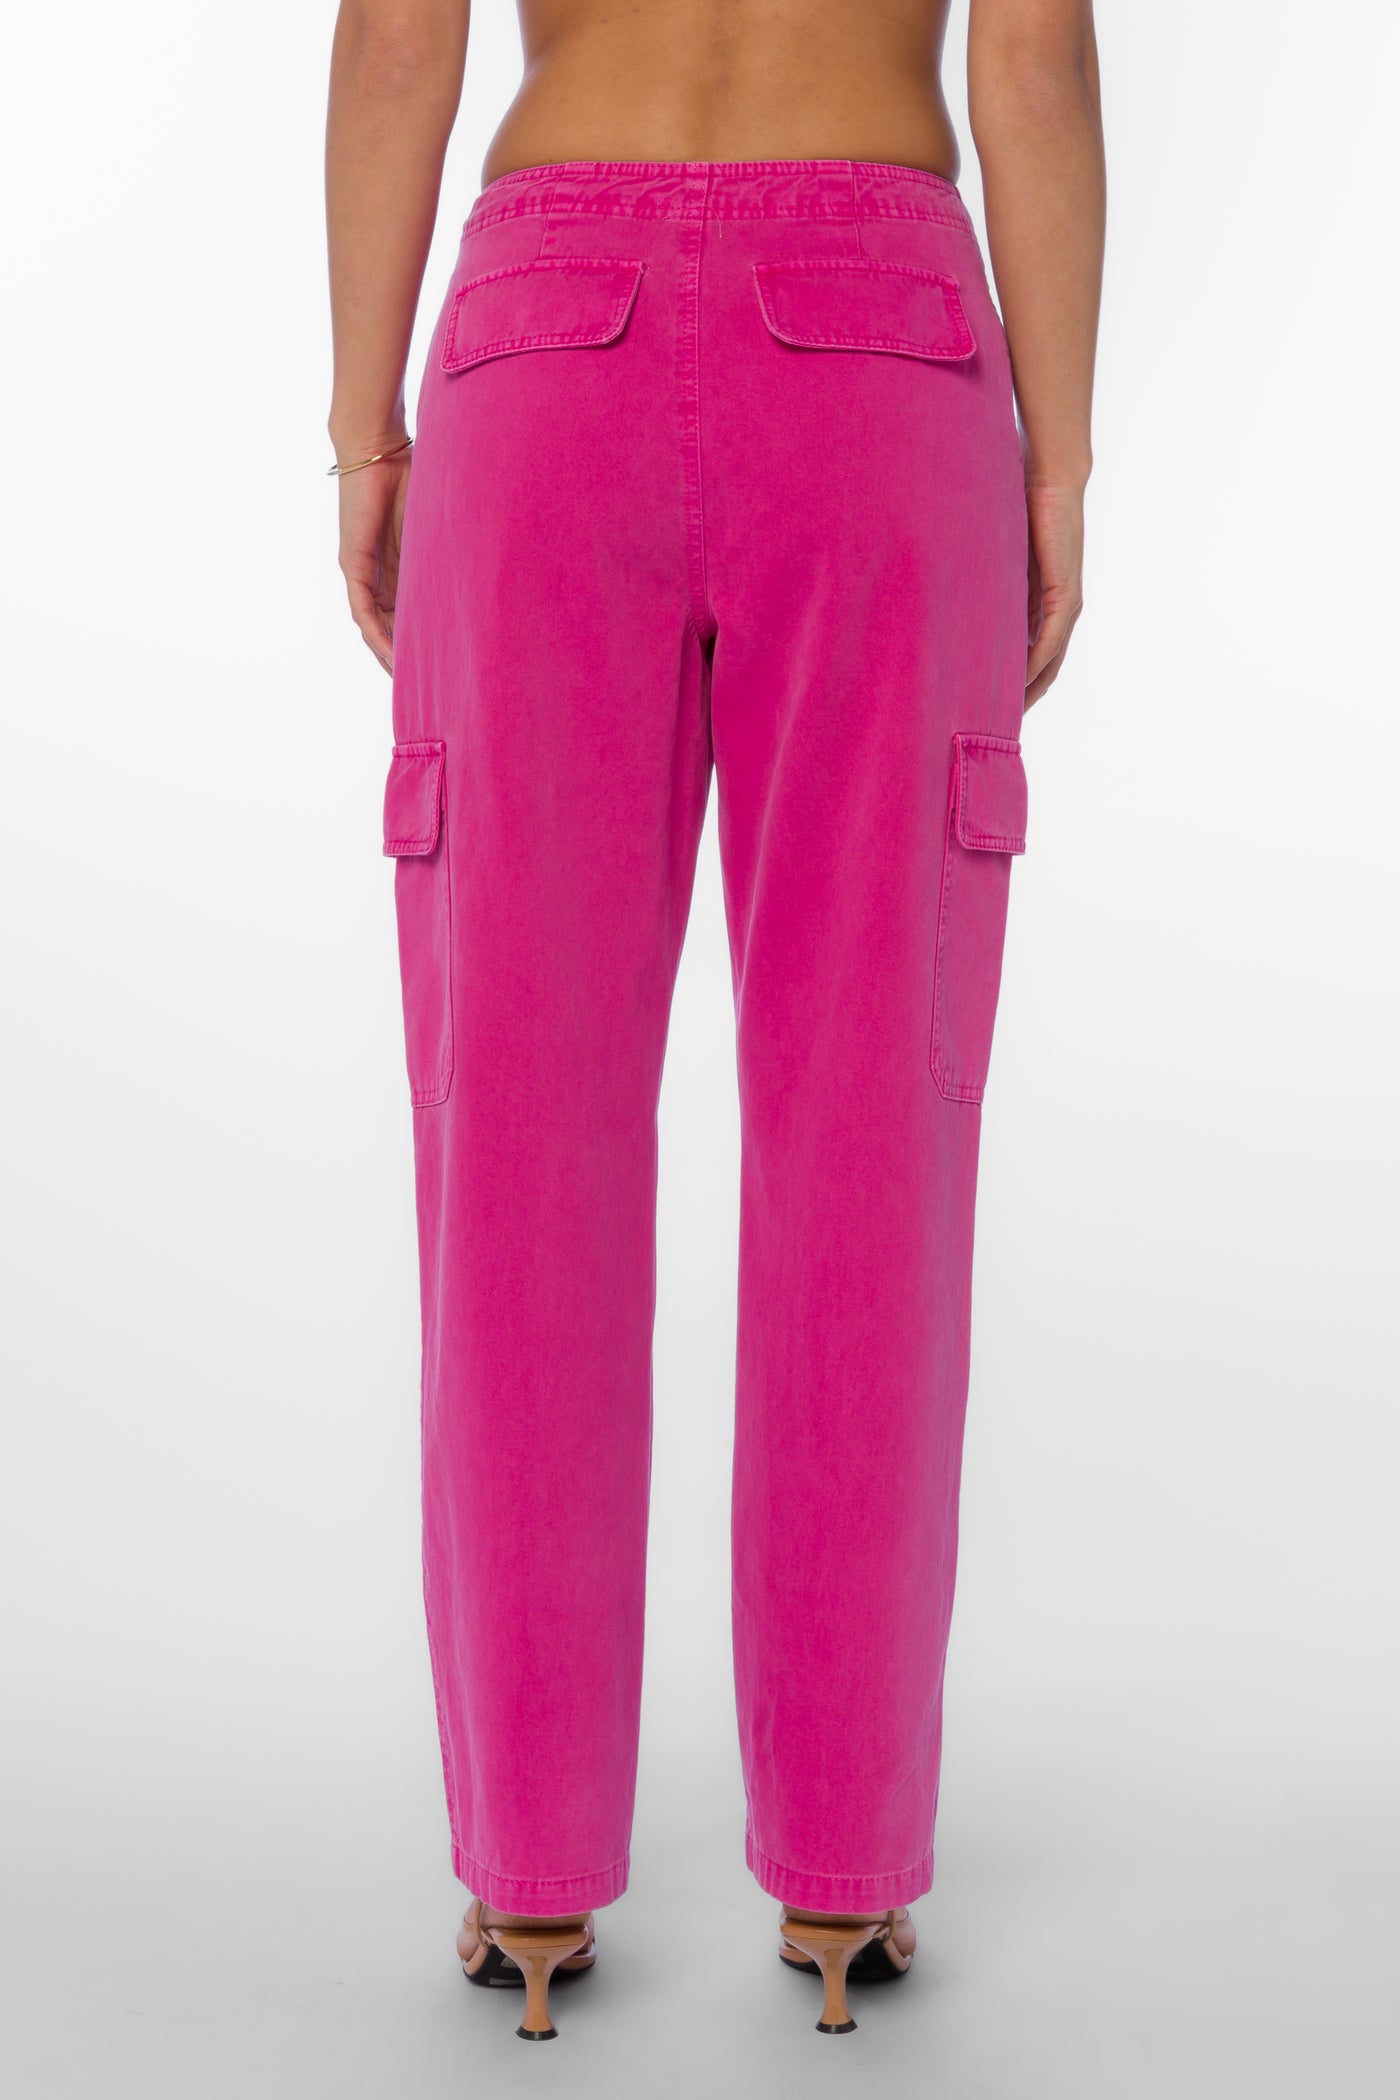 Dusty Hot Pink Pants - Bottoms - Velvet Heart Clothing